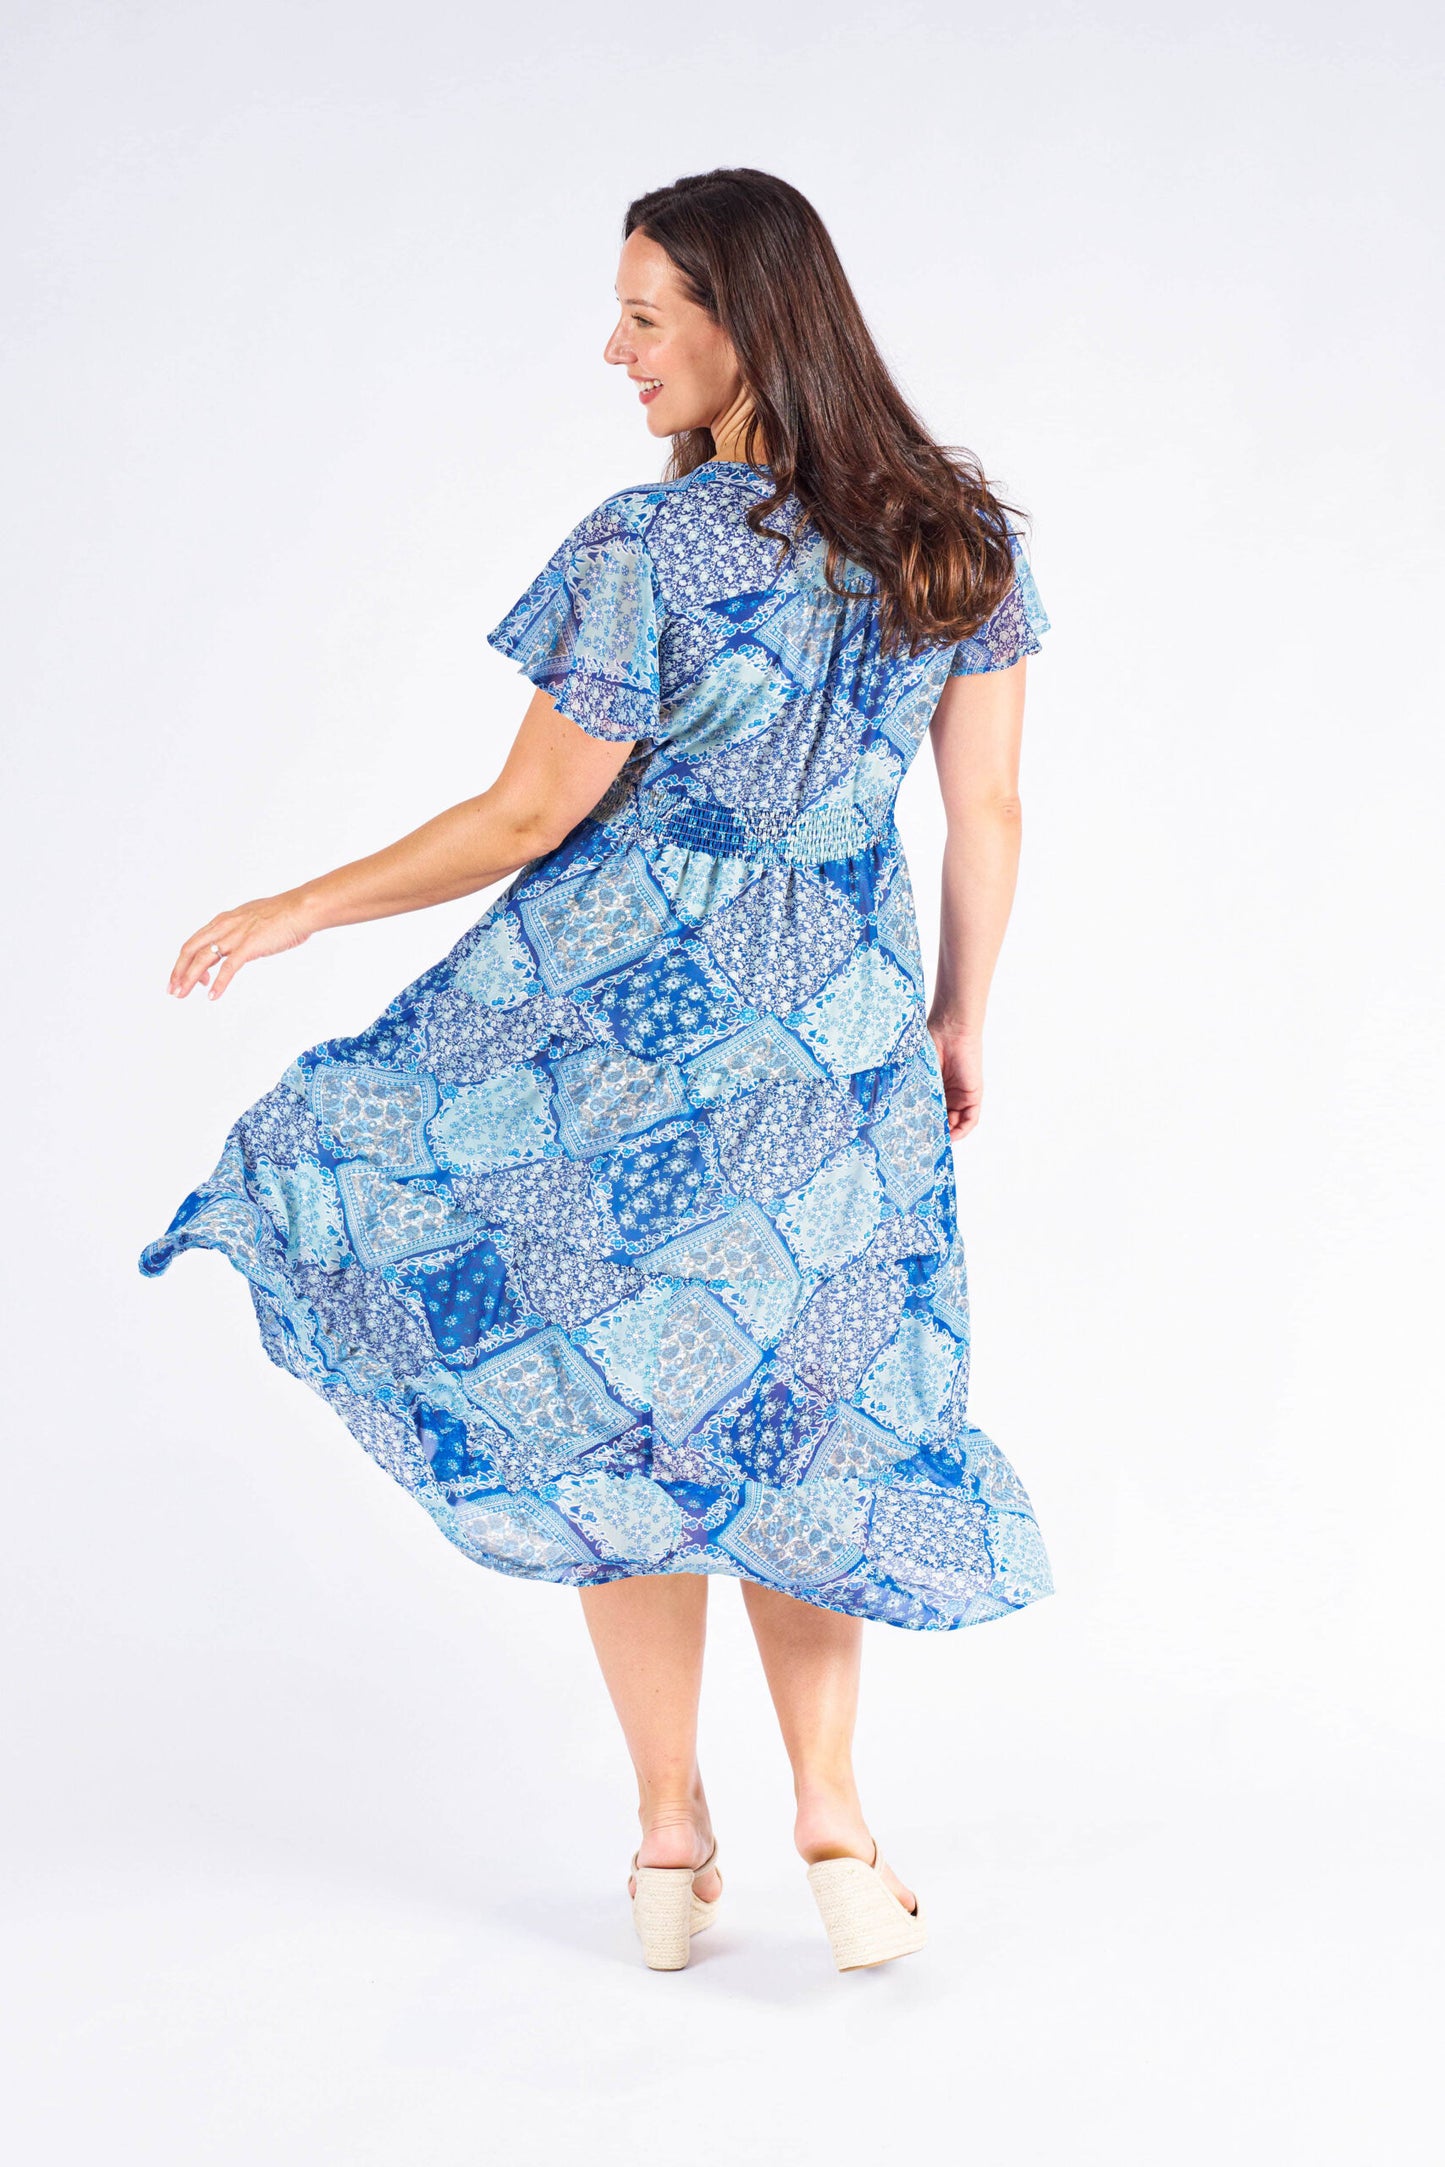 Boho Australia - Sinead Dress - Blue Floral